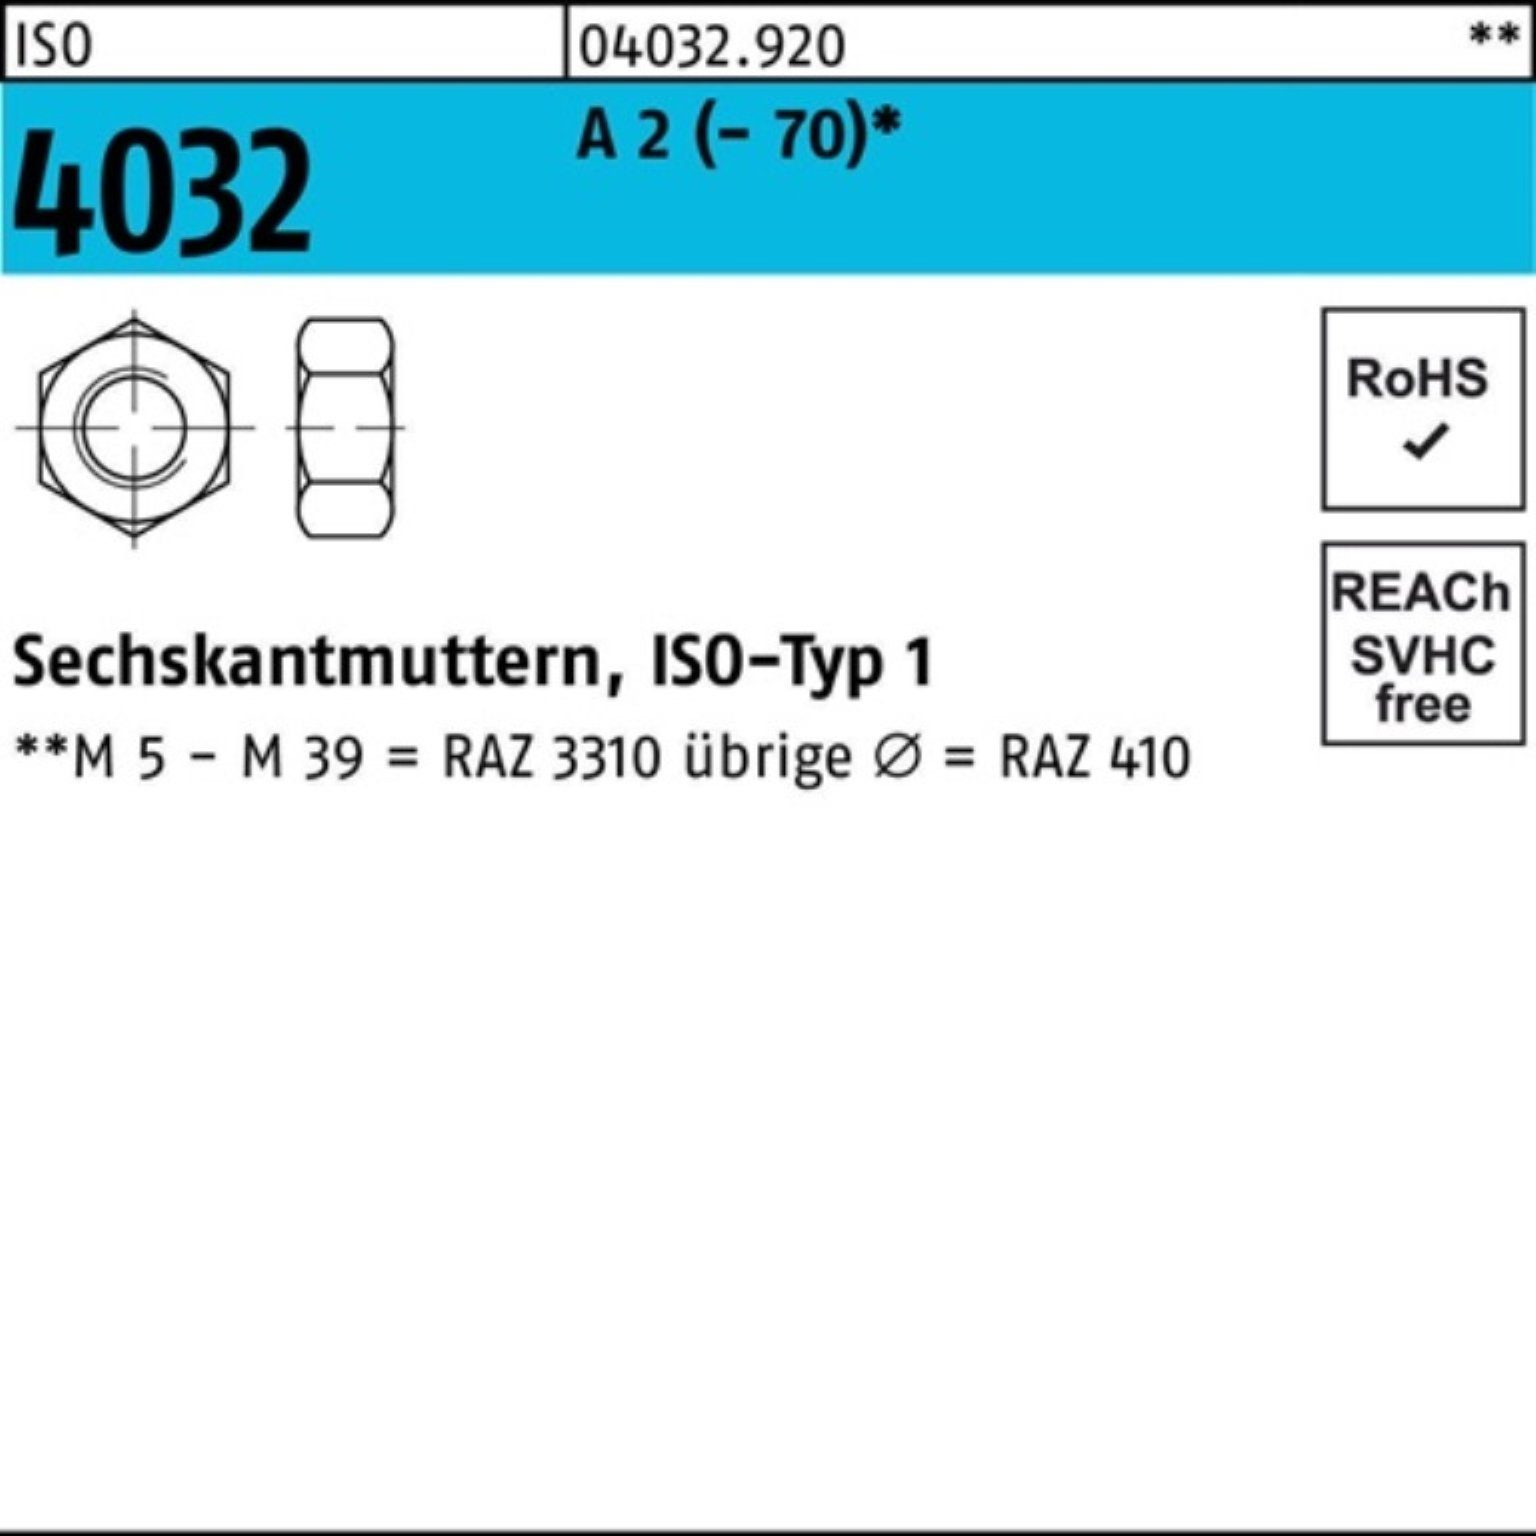 Bufab Muttern 1000er Pack Sechskantmutter ISO 4032 M5 A 2 (70) 1000 Stück ISO 403